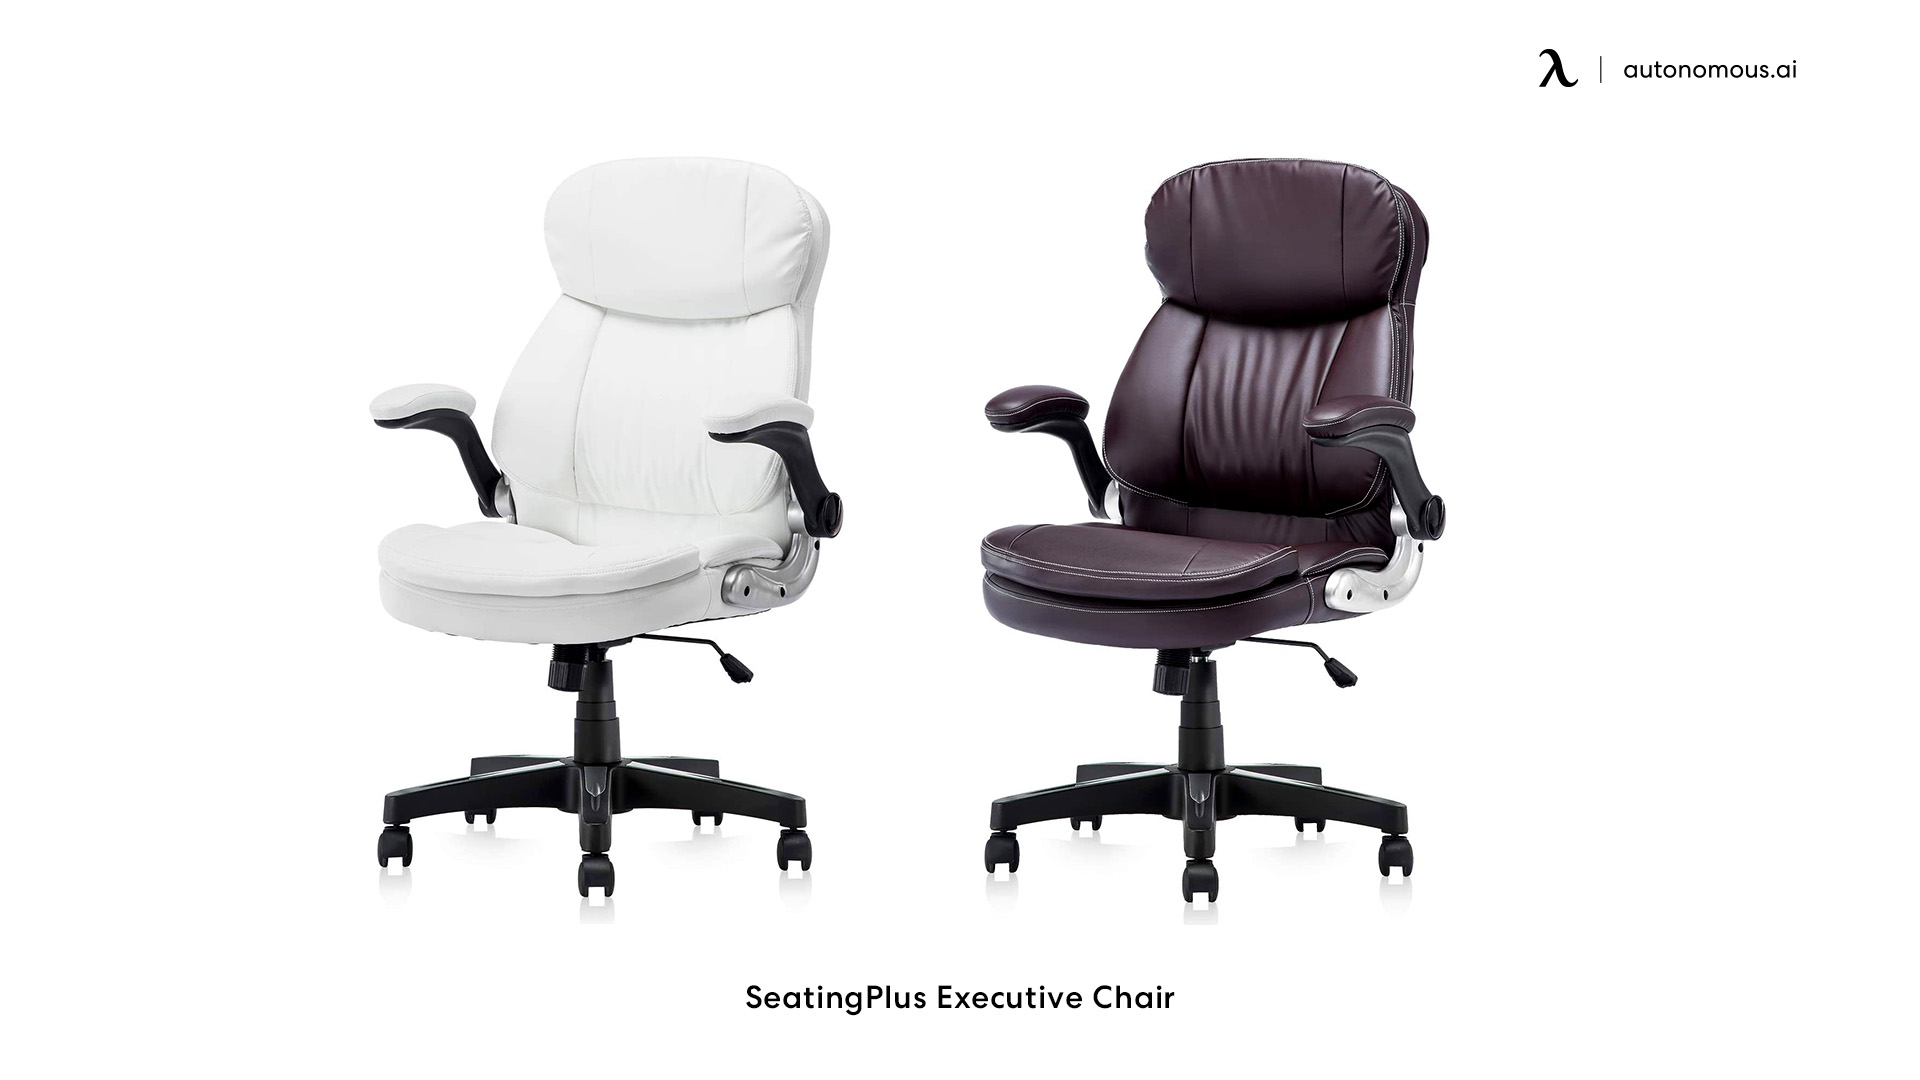 SeatingPlus Executive Chair